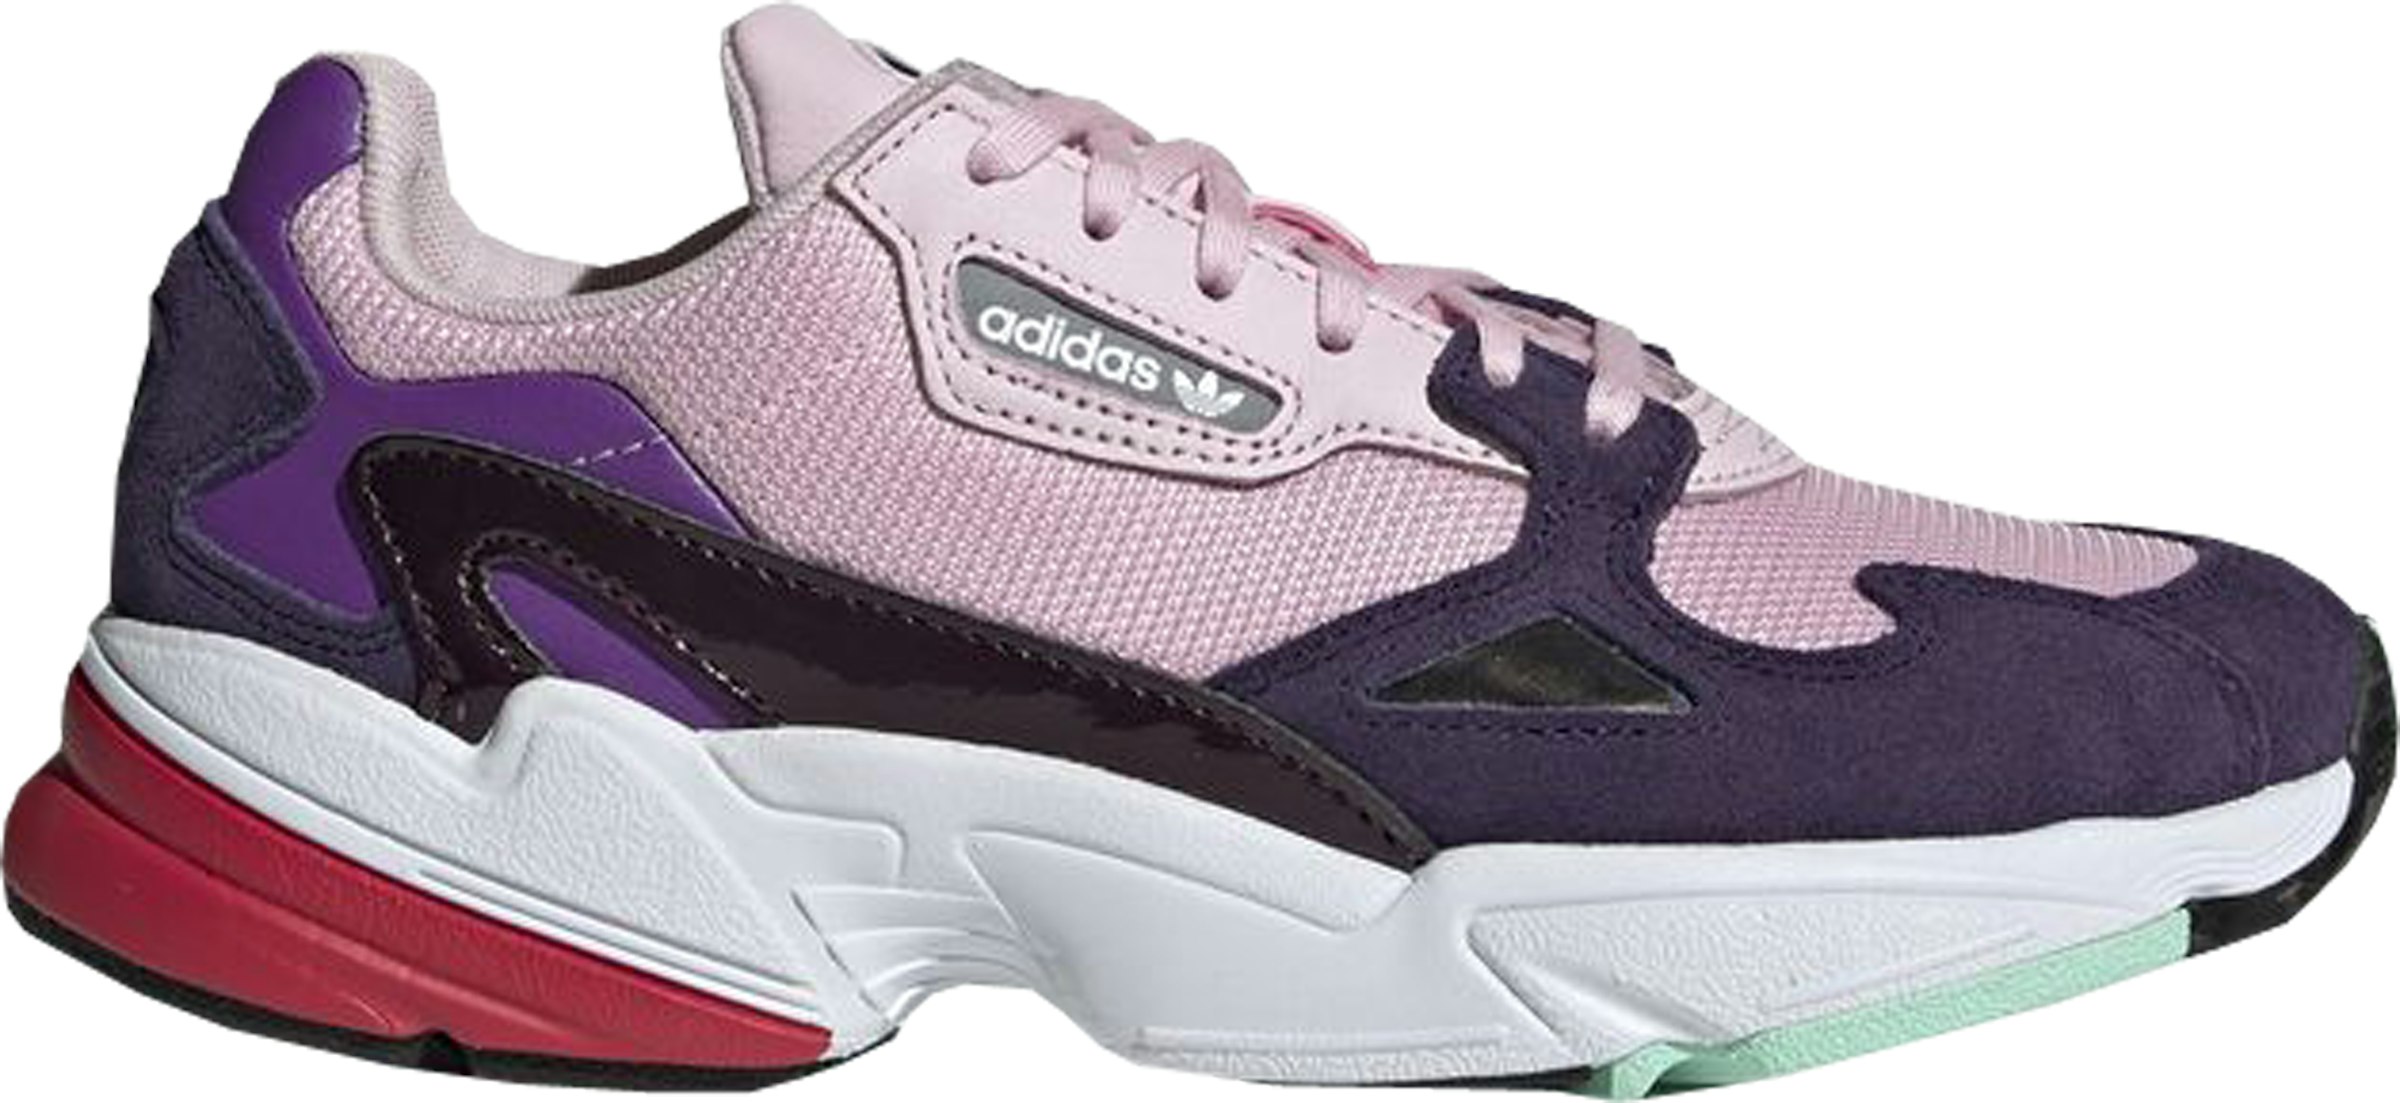 adidas Falcon Pink Legend Purple BD7825 - US